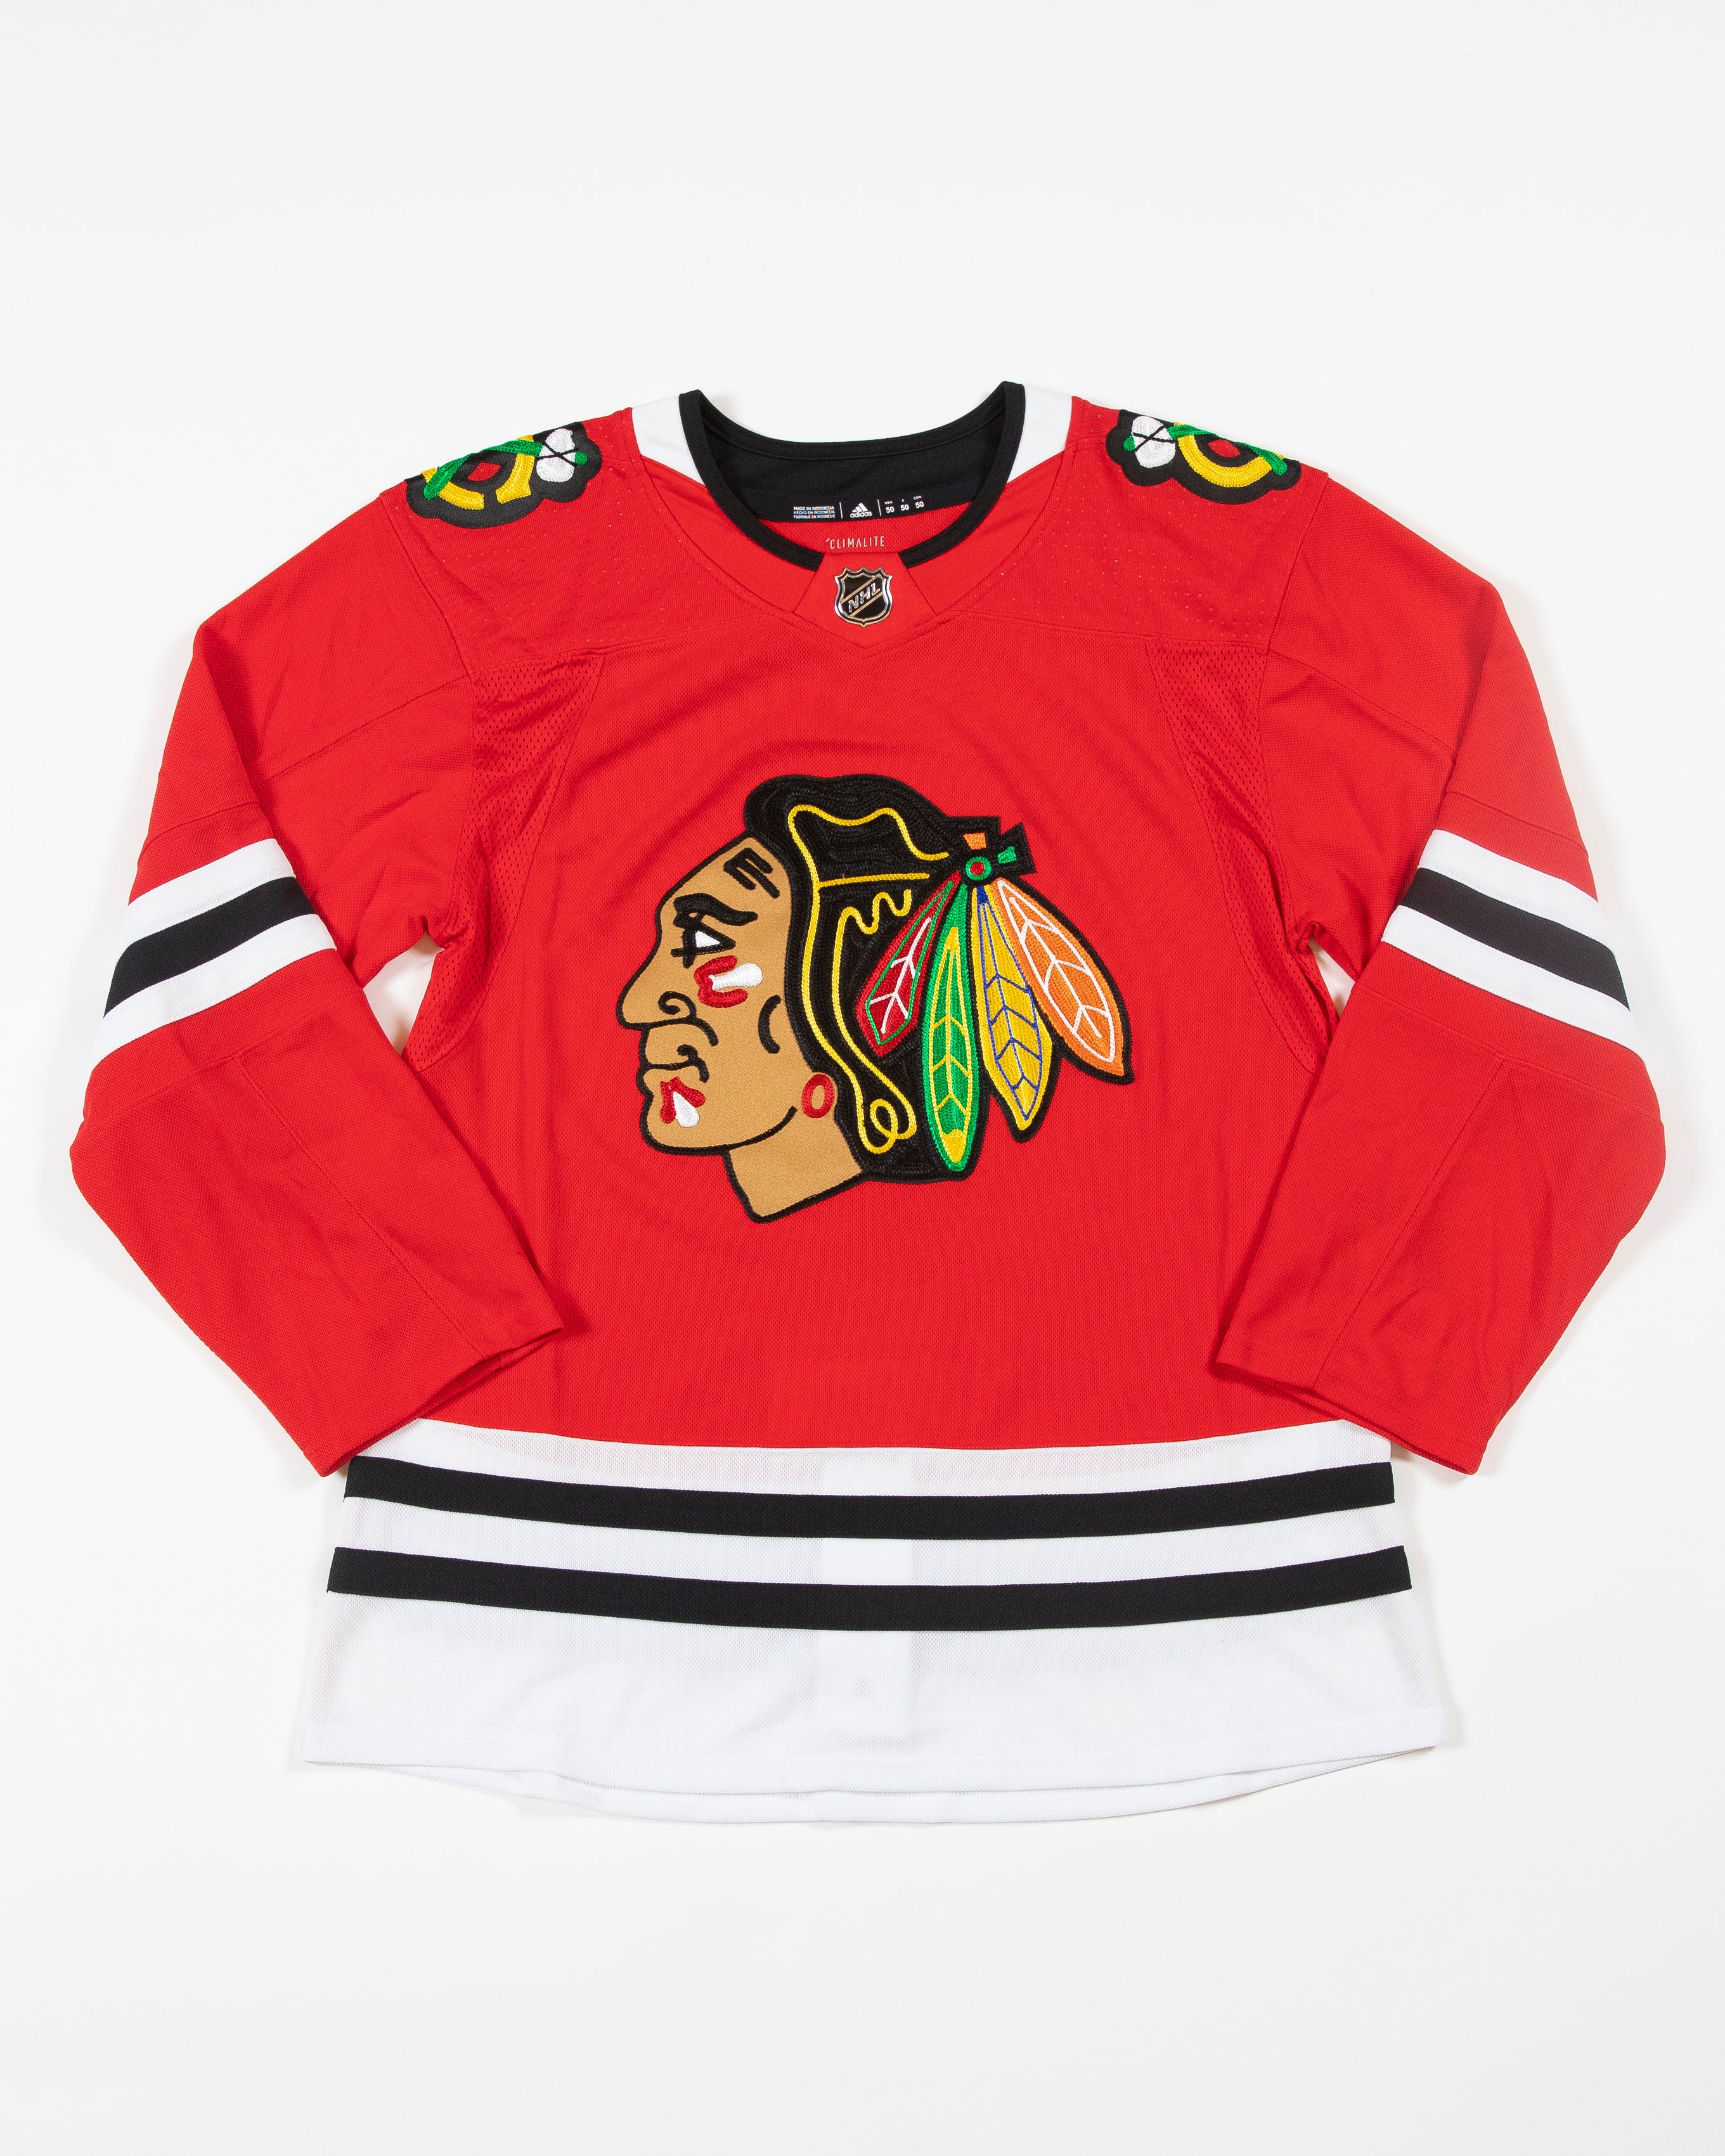 Connor Bedard Chicago Blackhawks Adidas Primegreen Authentic NHL Hockey Jersey, Away / L/52